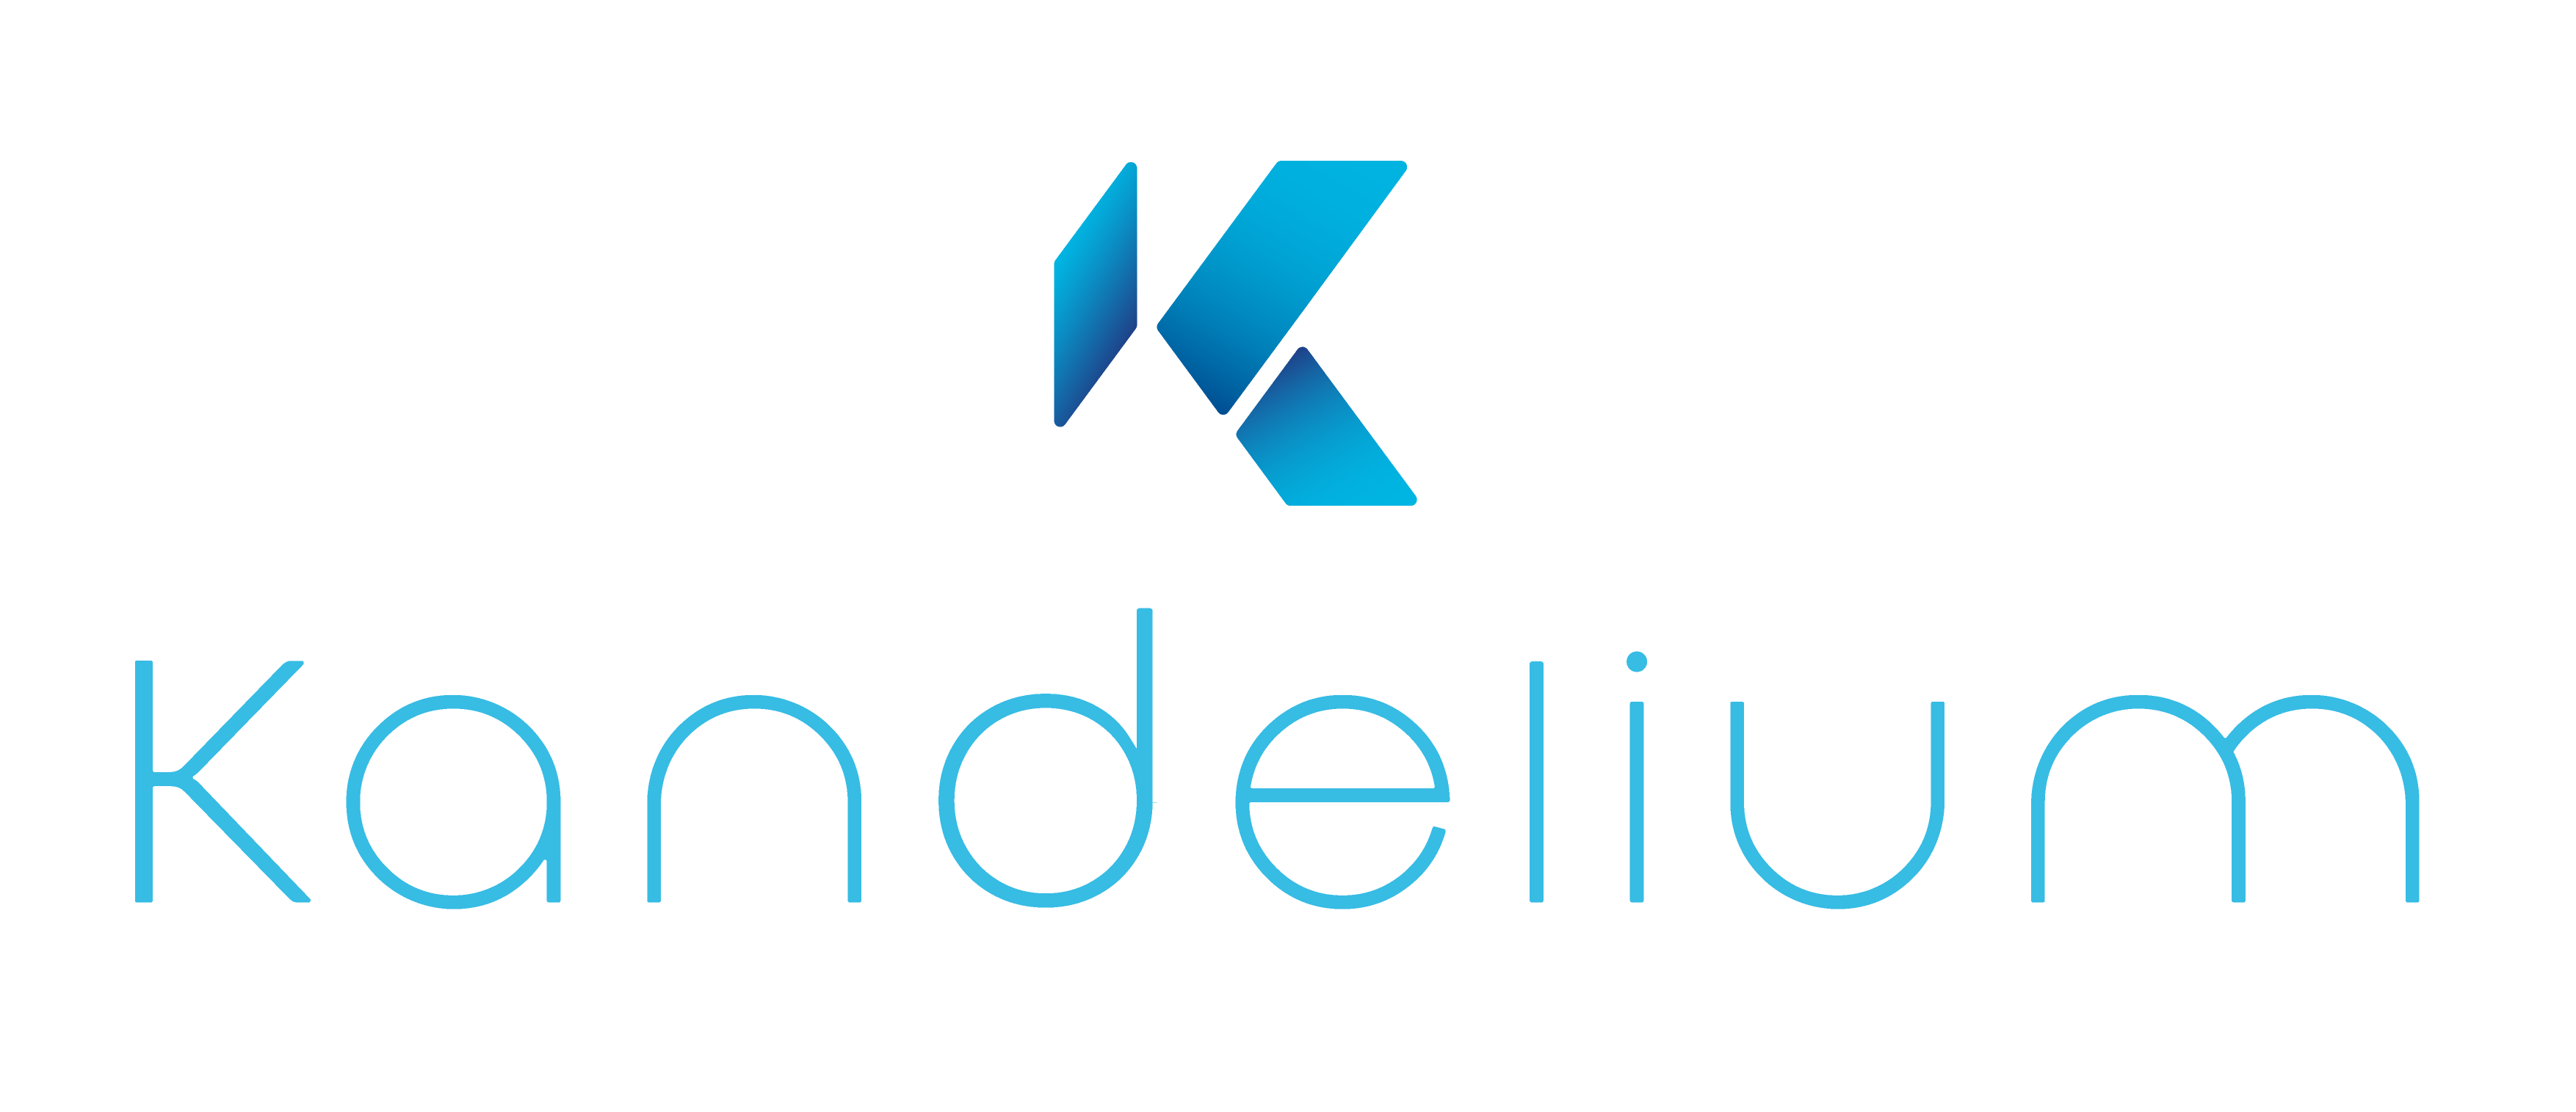 Kandelium GmbH